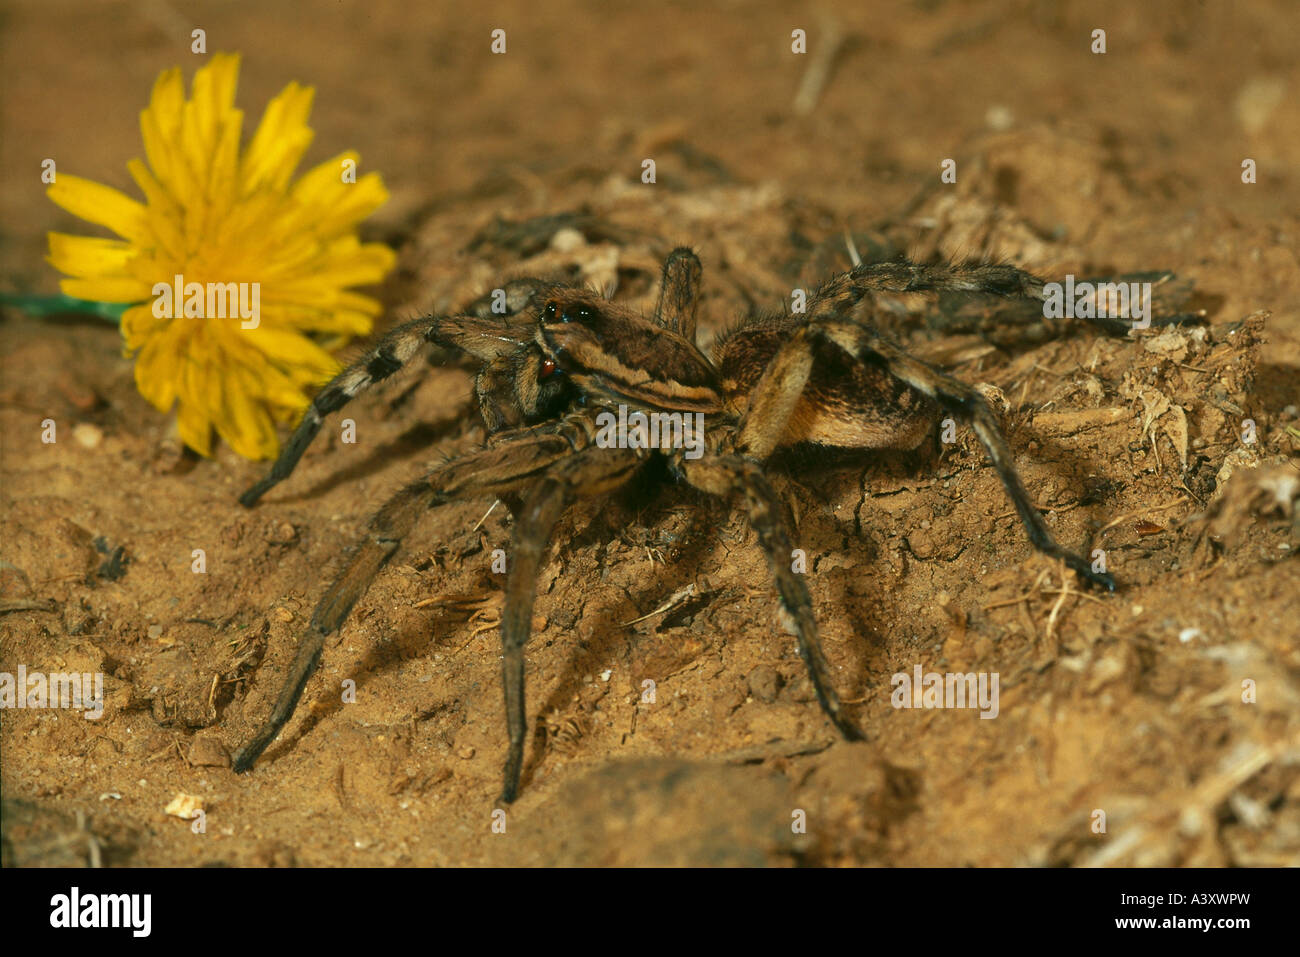 zoology / animals, arachnid, spiders, Tarantula, Black-bellied Tarantula, (Lycosa narbonensis), on sand ground, distribution: So Stock Photo